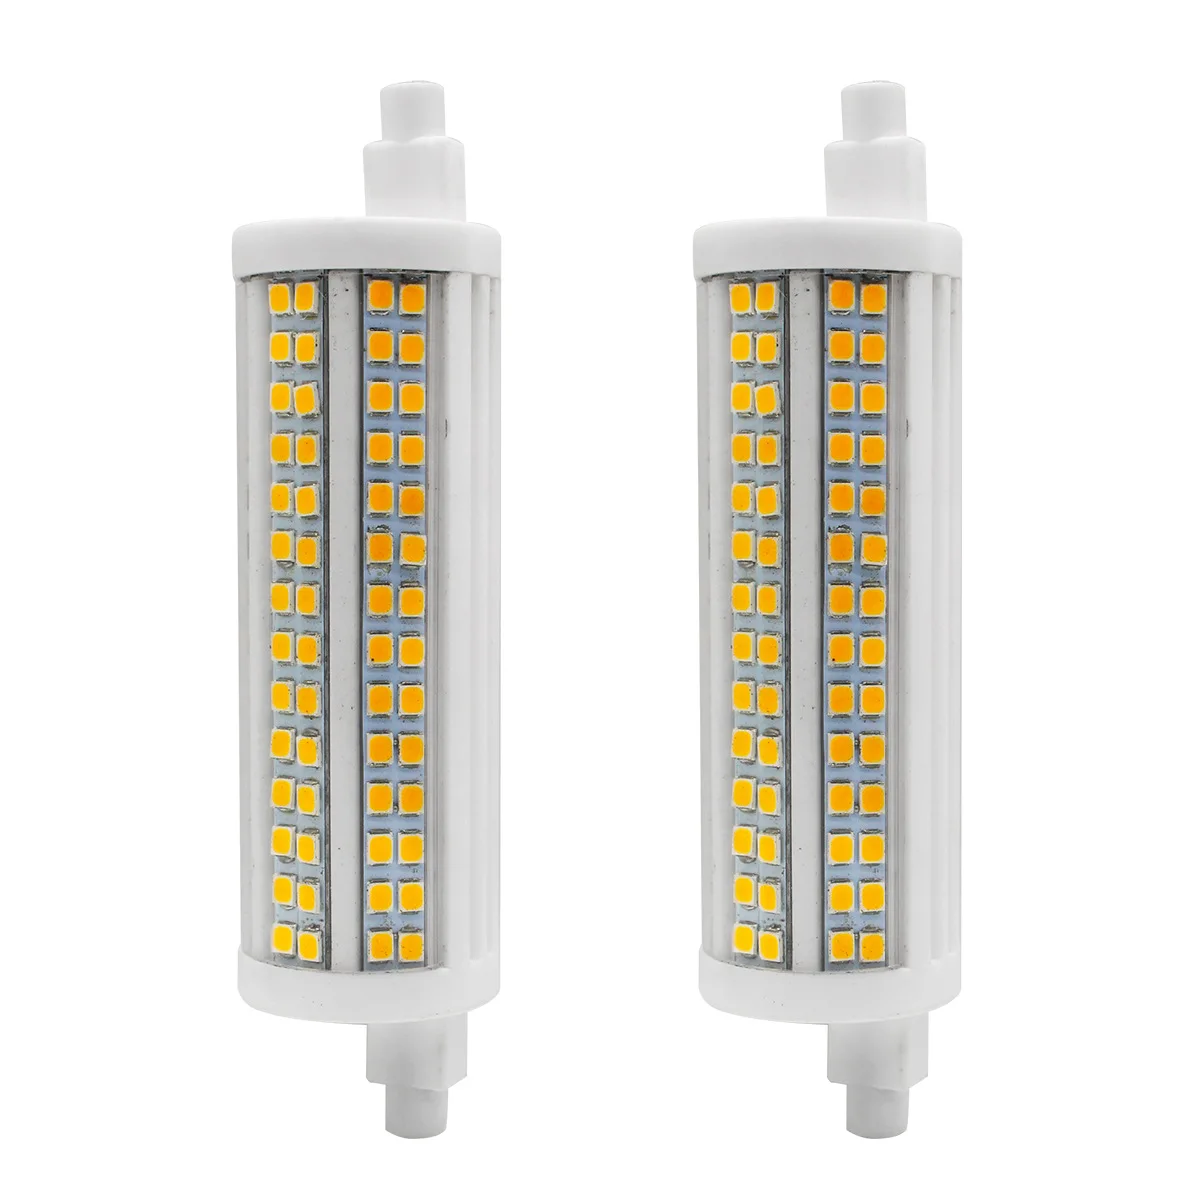 Dimmable LED R7S 118 20W 2500lm Light Bulb Replace J118 500W 230/120V corn light Energy Saving Replace Halogen Light